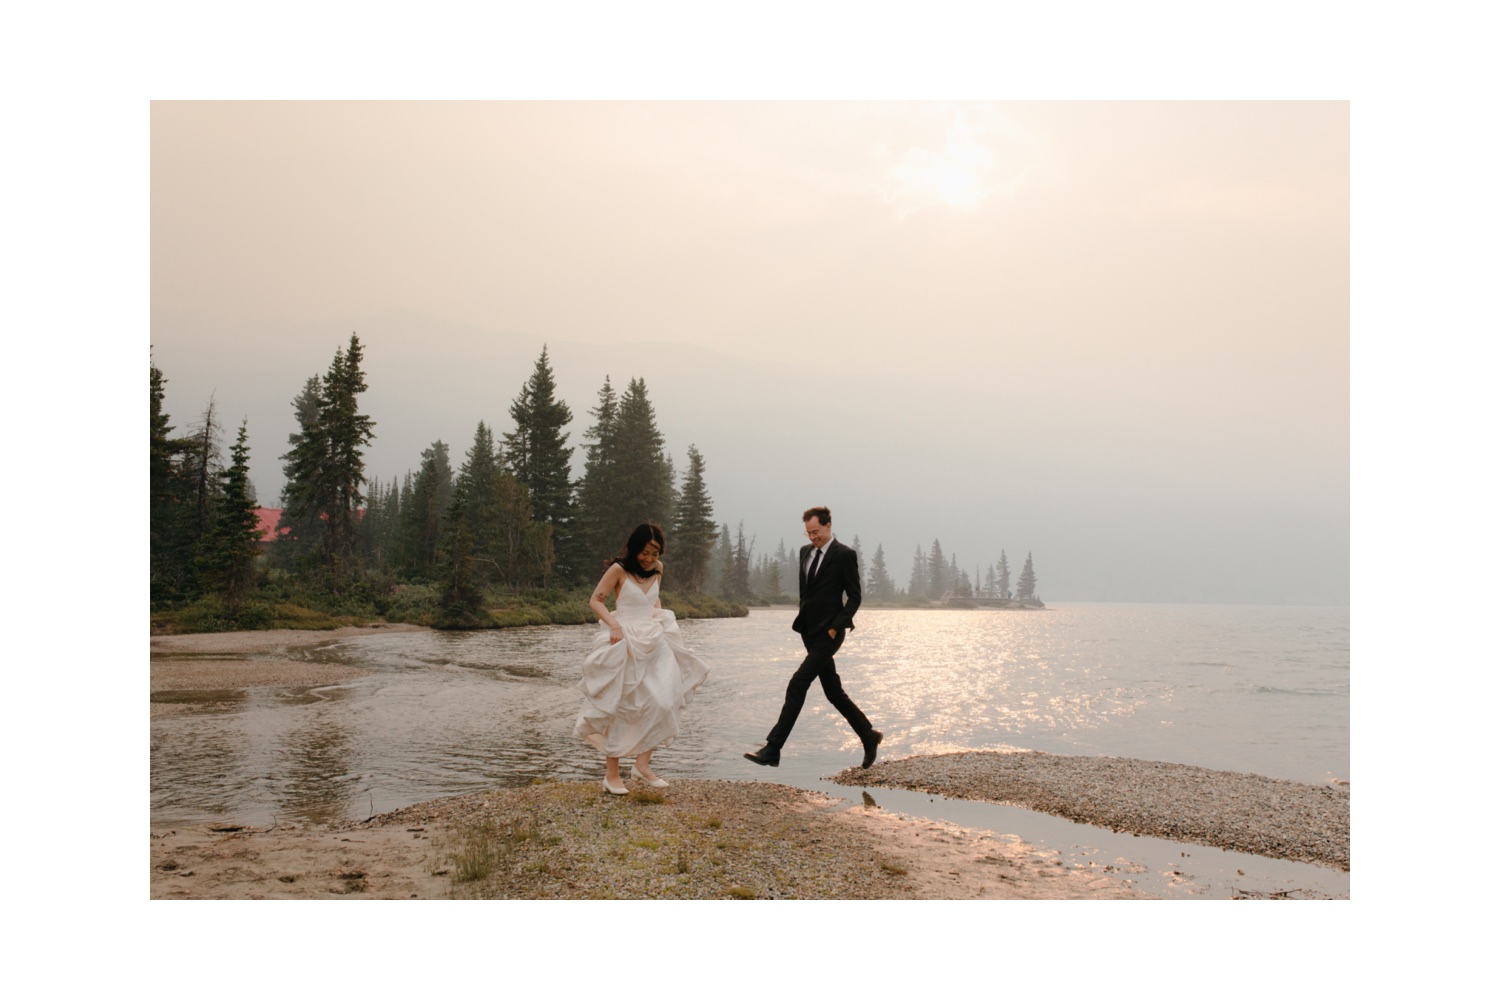 Smokey wedding photos in Banff National Park